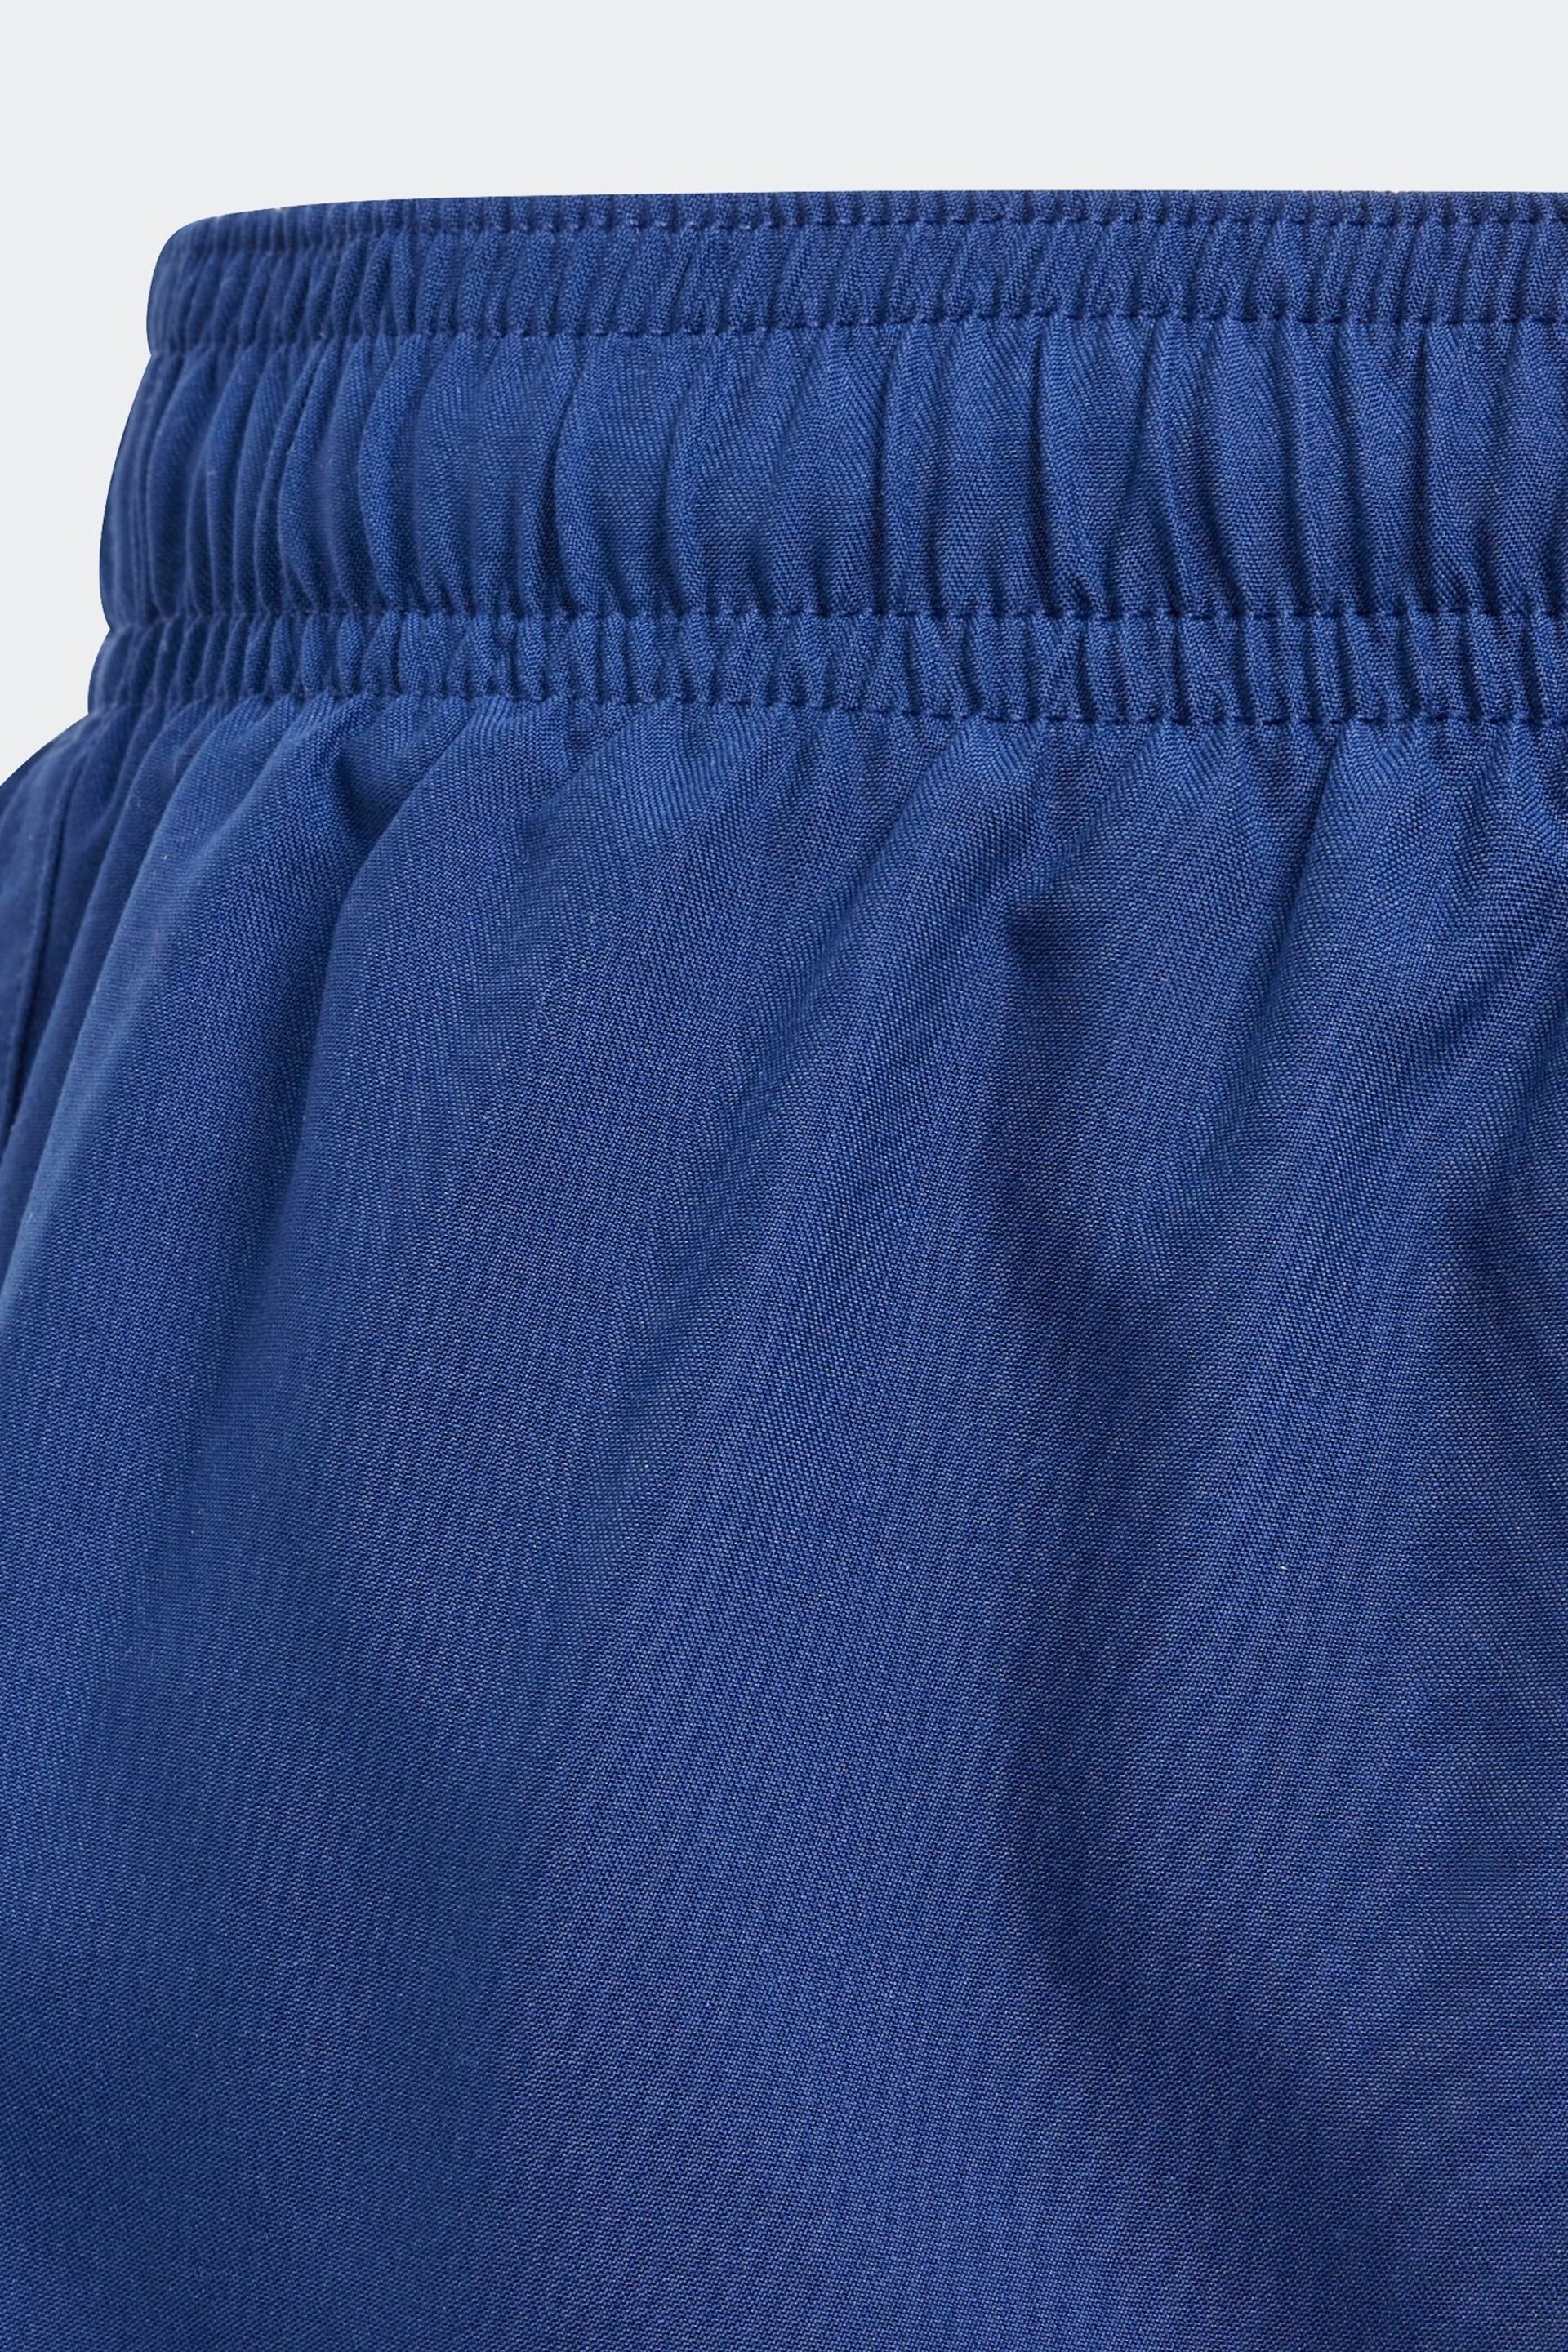 adidas Blue Essential Shorts - Image 5 of 5